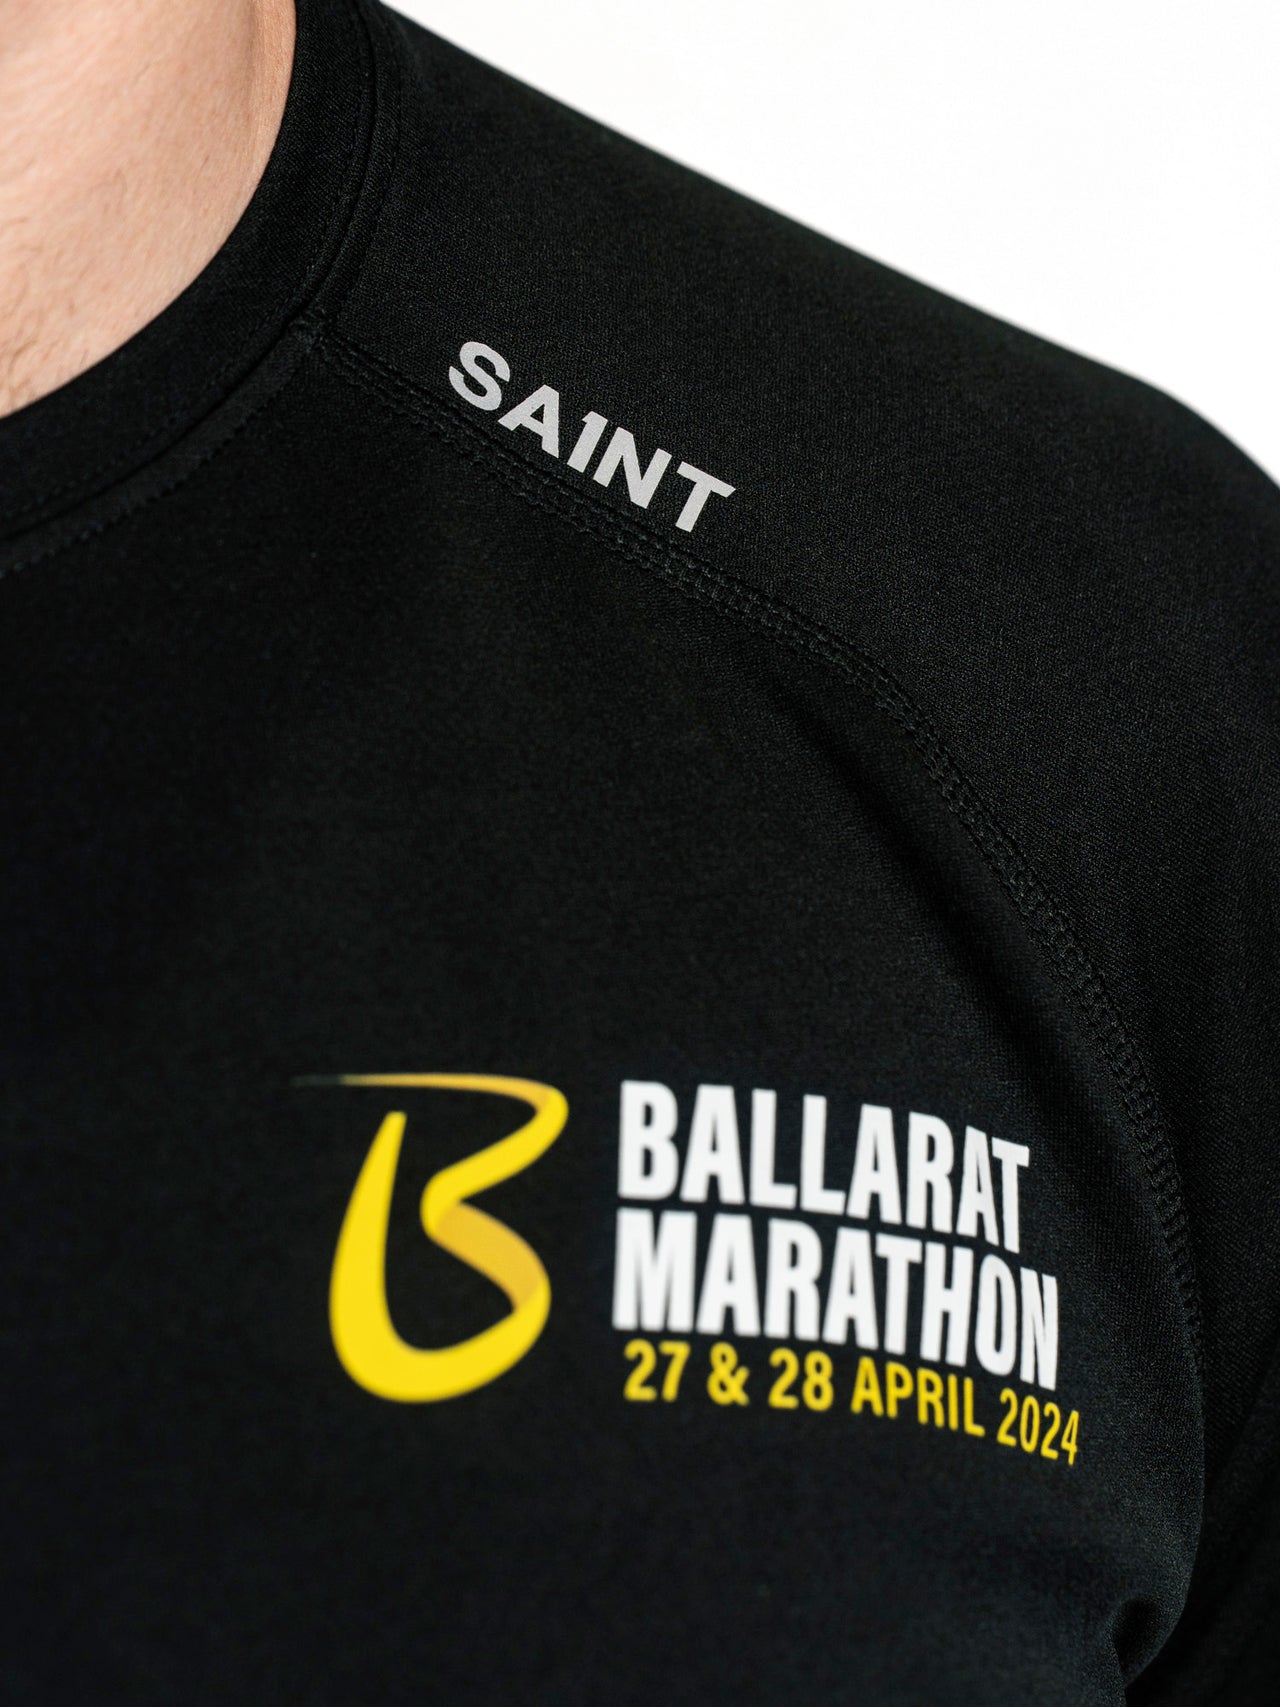 Ballarat Marathon 2024 Run T-shirt